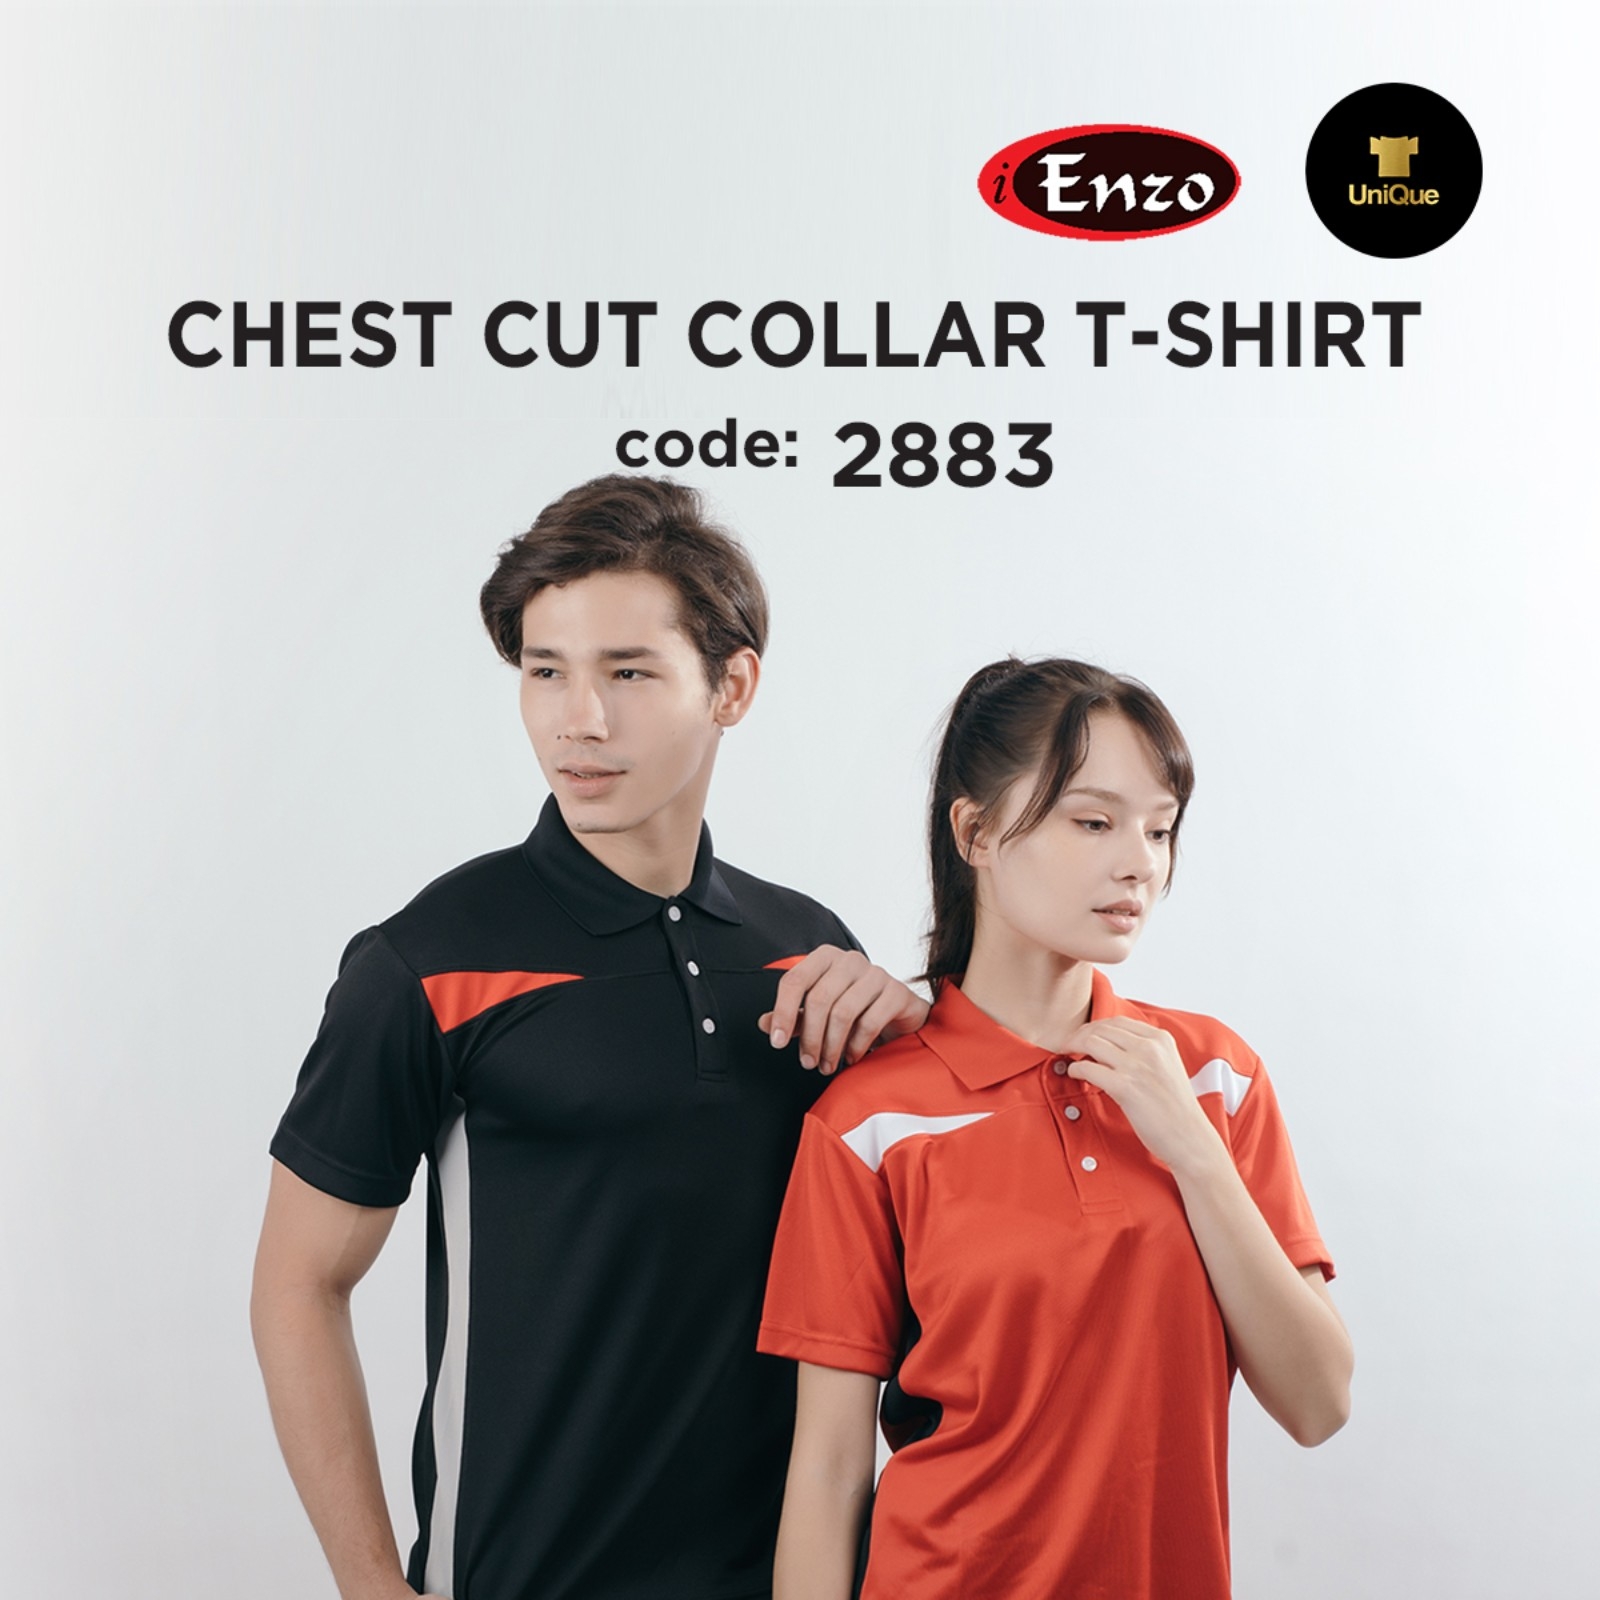 Unisex T-shirt Collar | Plain Collar T-shirt |  Polo T-shirt | Adult / Unisex 2883 CHEST CUT COLLAR T-SHIRT